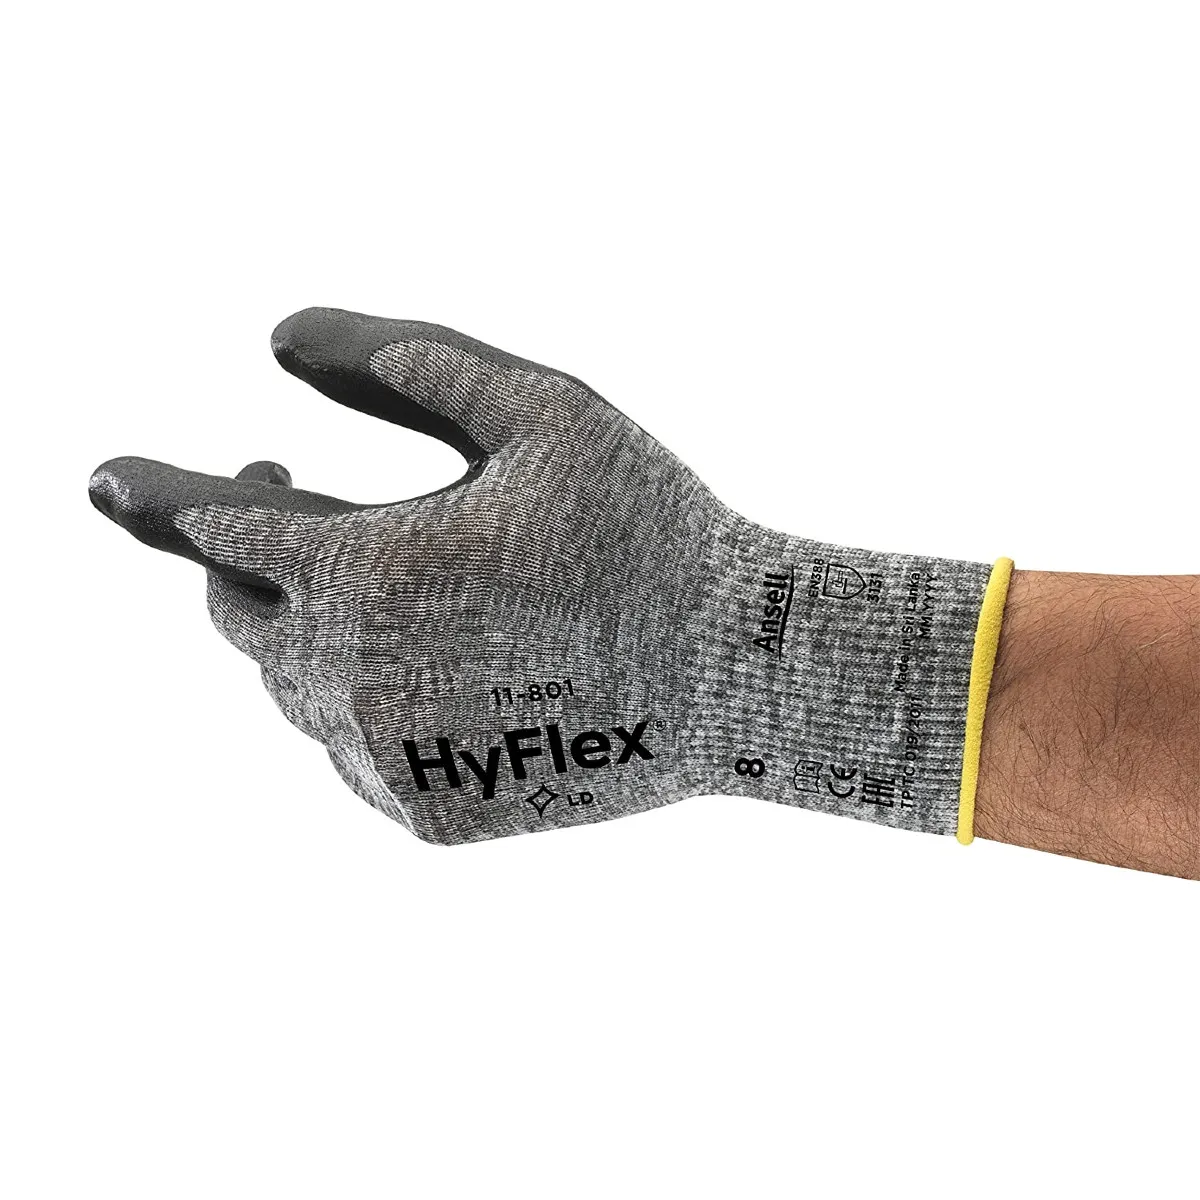 Zaštitne rukavice HYFLEX FOAM 11-801 sivo-crne - Ansell - PAR 